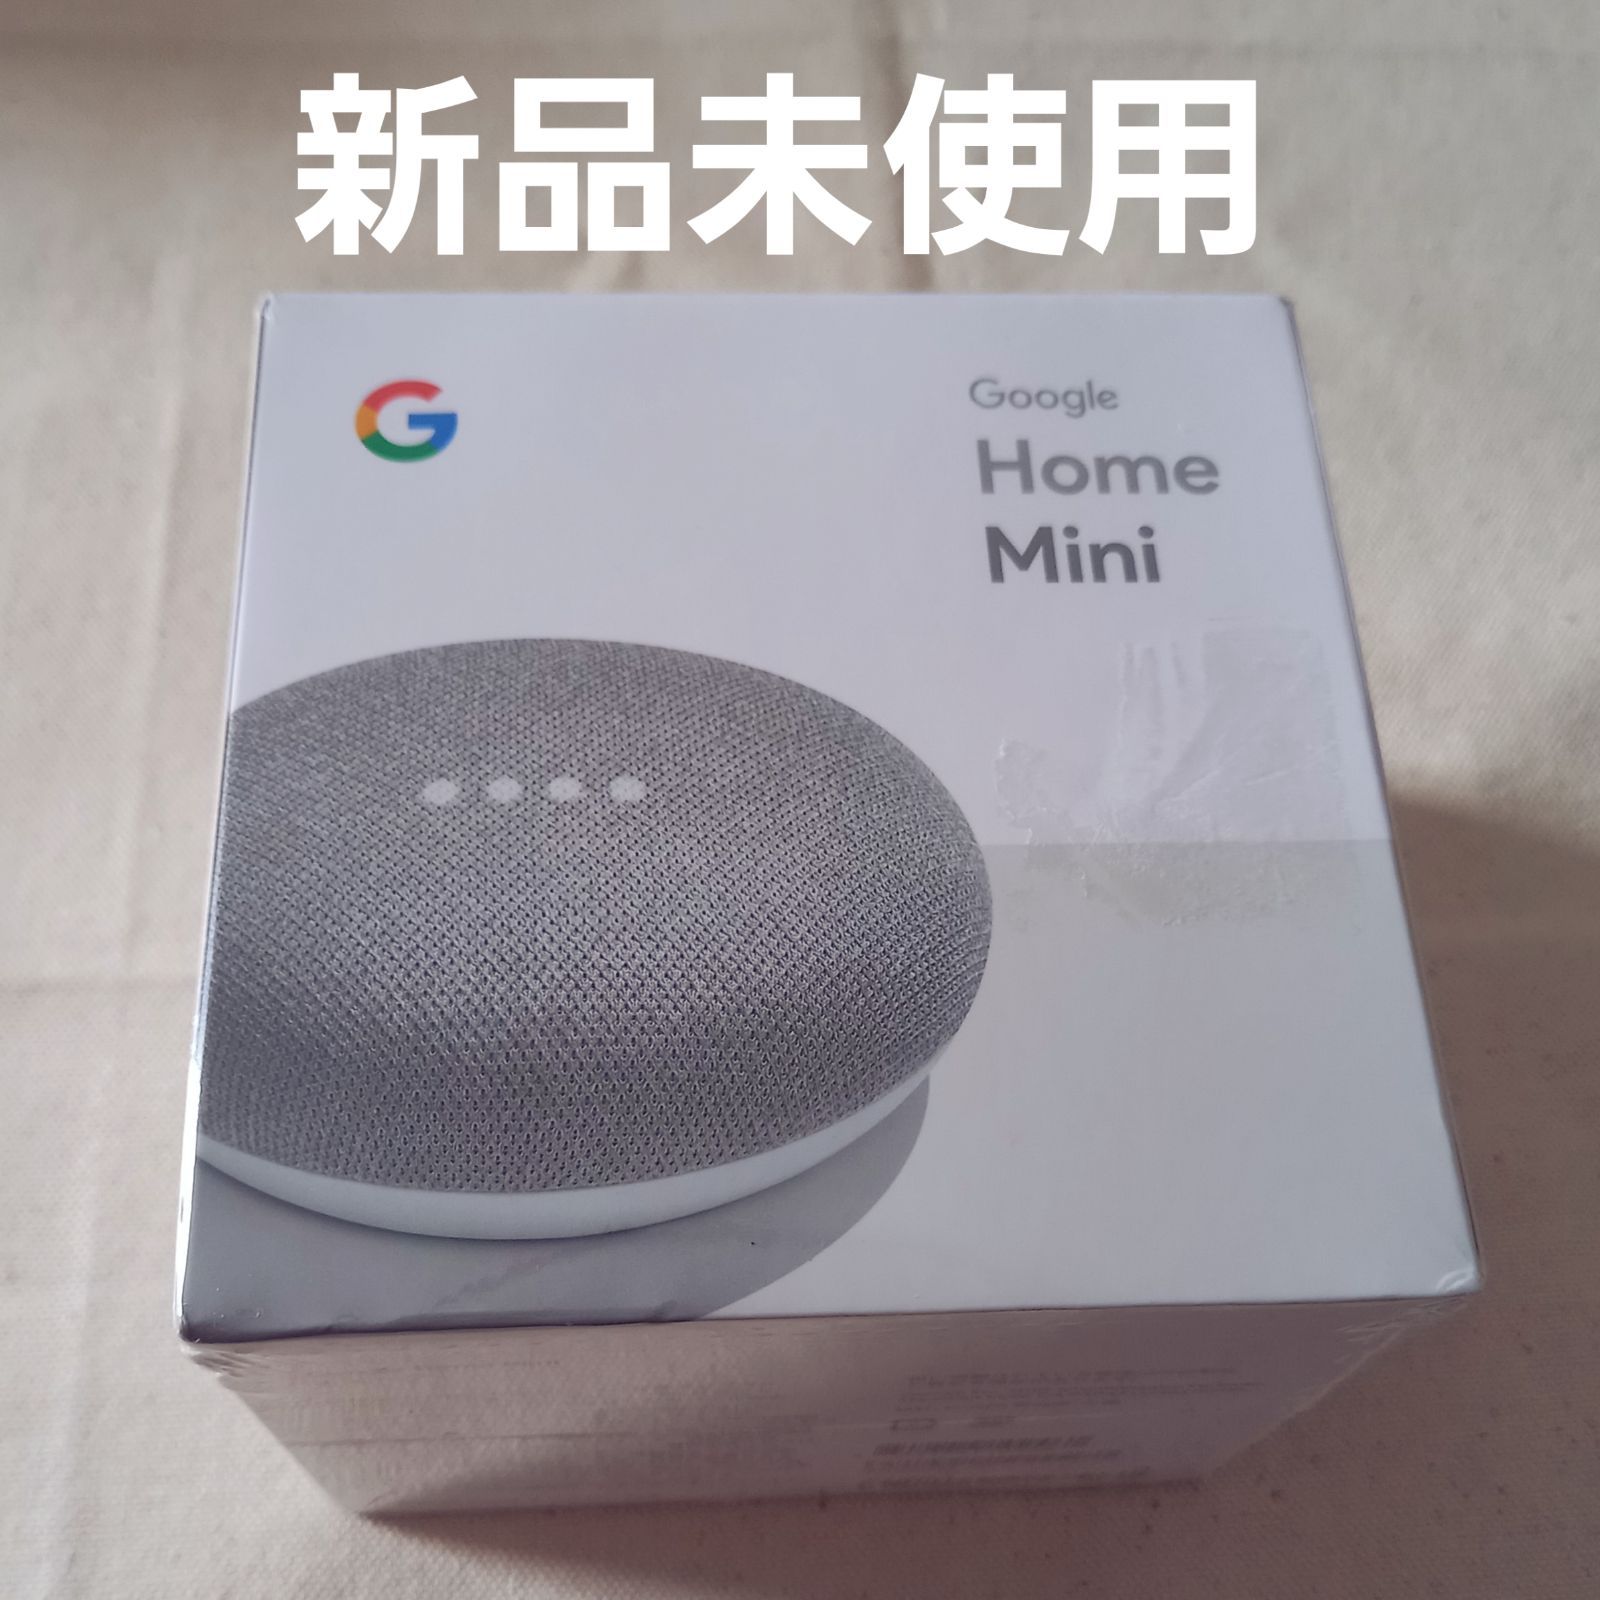 Google Home Mini チョーク GA00210-JP